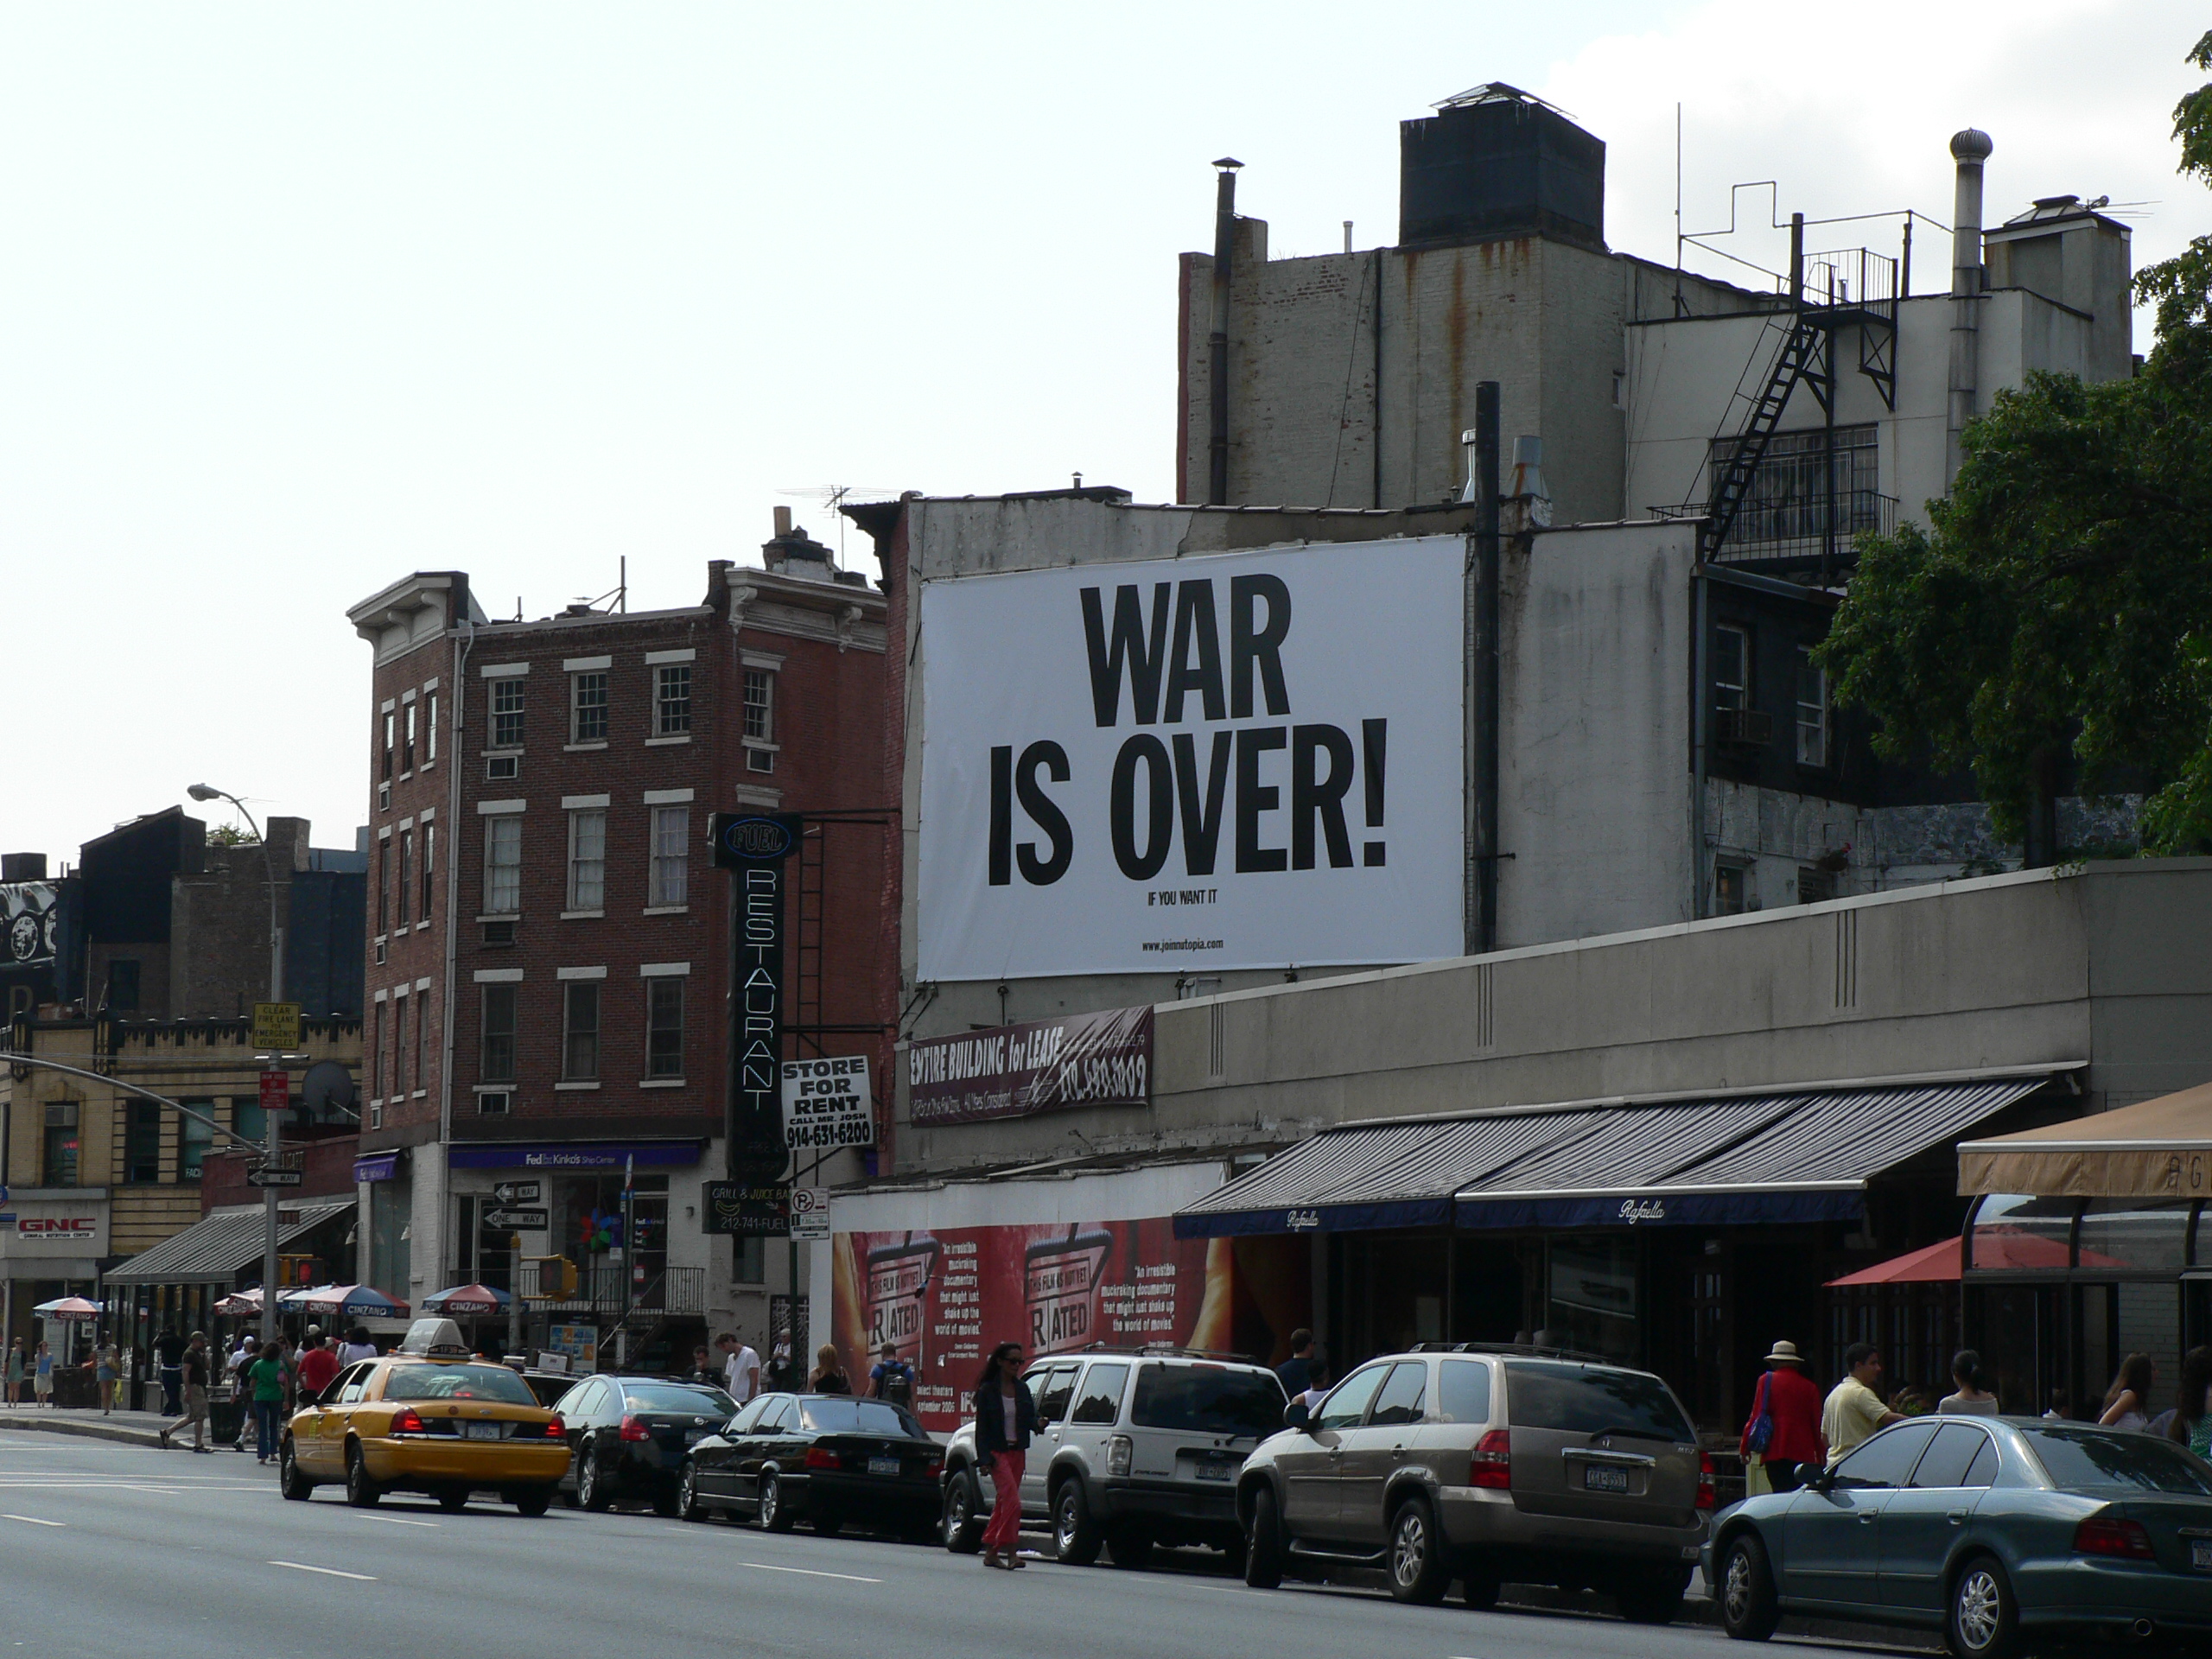 https://publicdelivery.org/wp-content/uploads/2021/06/War-is-Over-billboard-Manhattan-New-York-2006.jpg